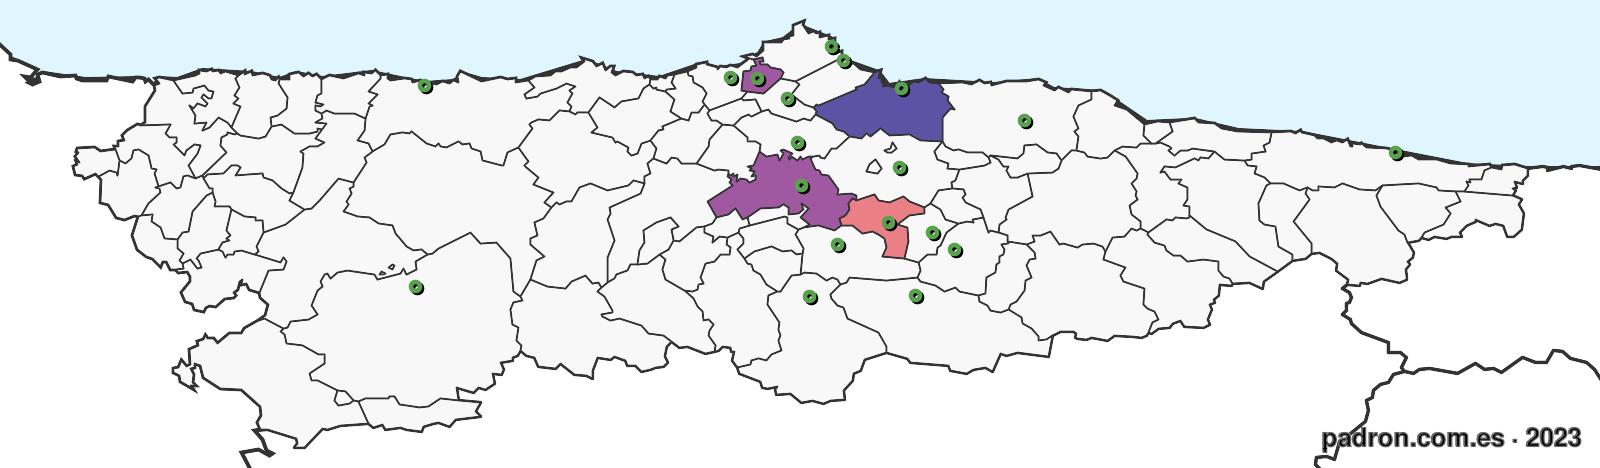 georgianos en asturias.